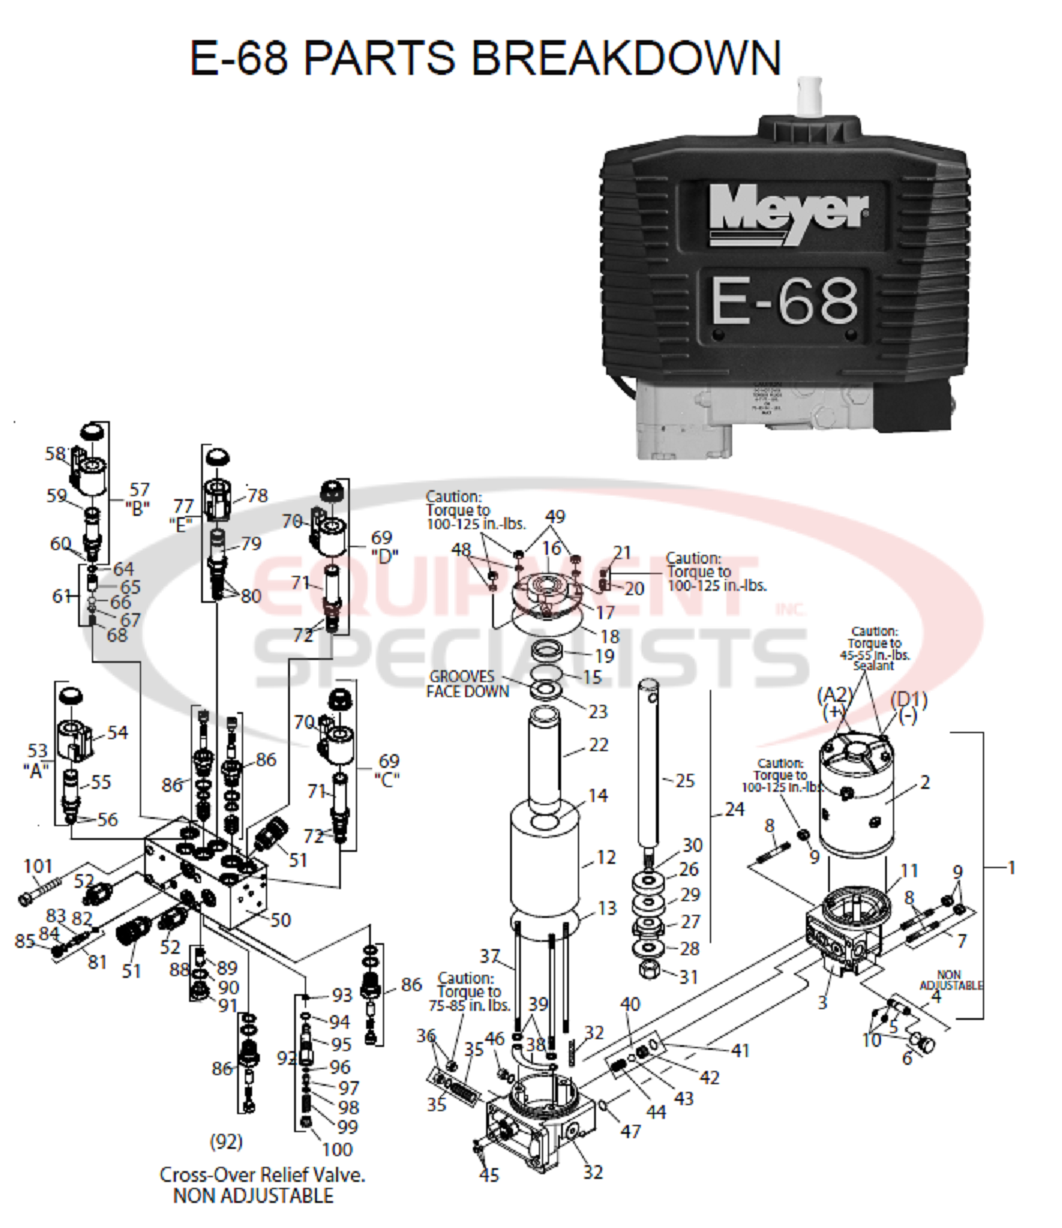 Meyer E-68 Parts Breakdown Diagram